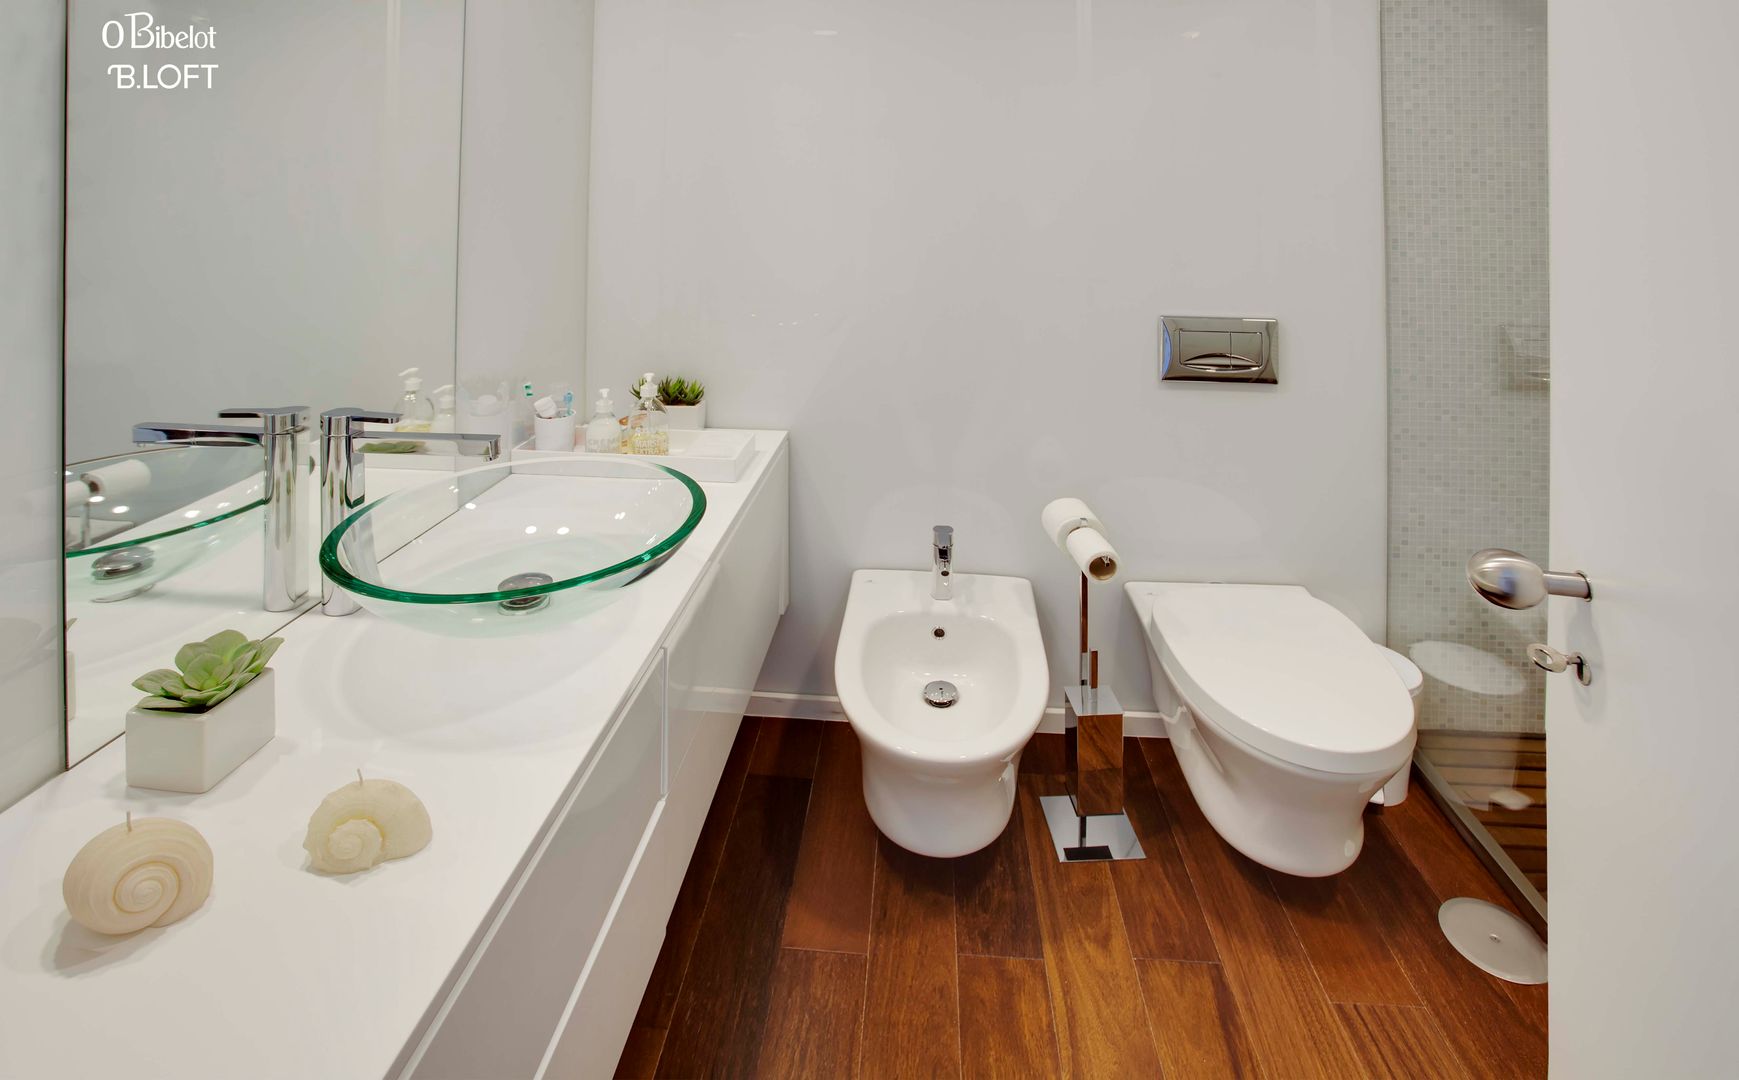 2015, Decoração de Apartamento BI, B.loft B.loft Minimal style Bathroom